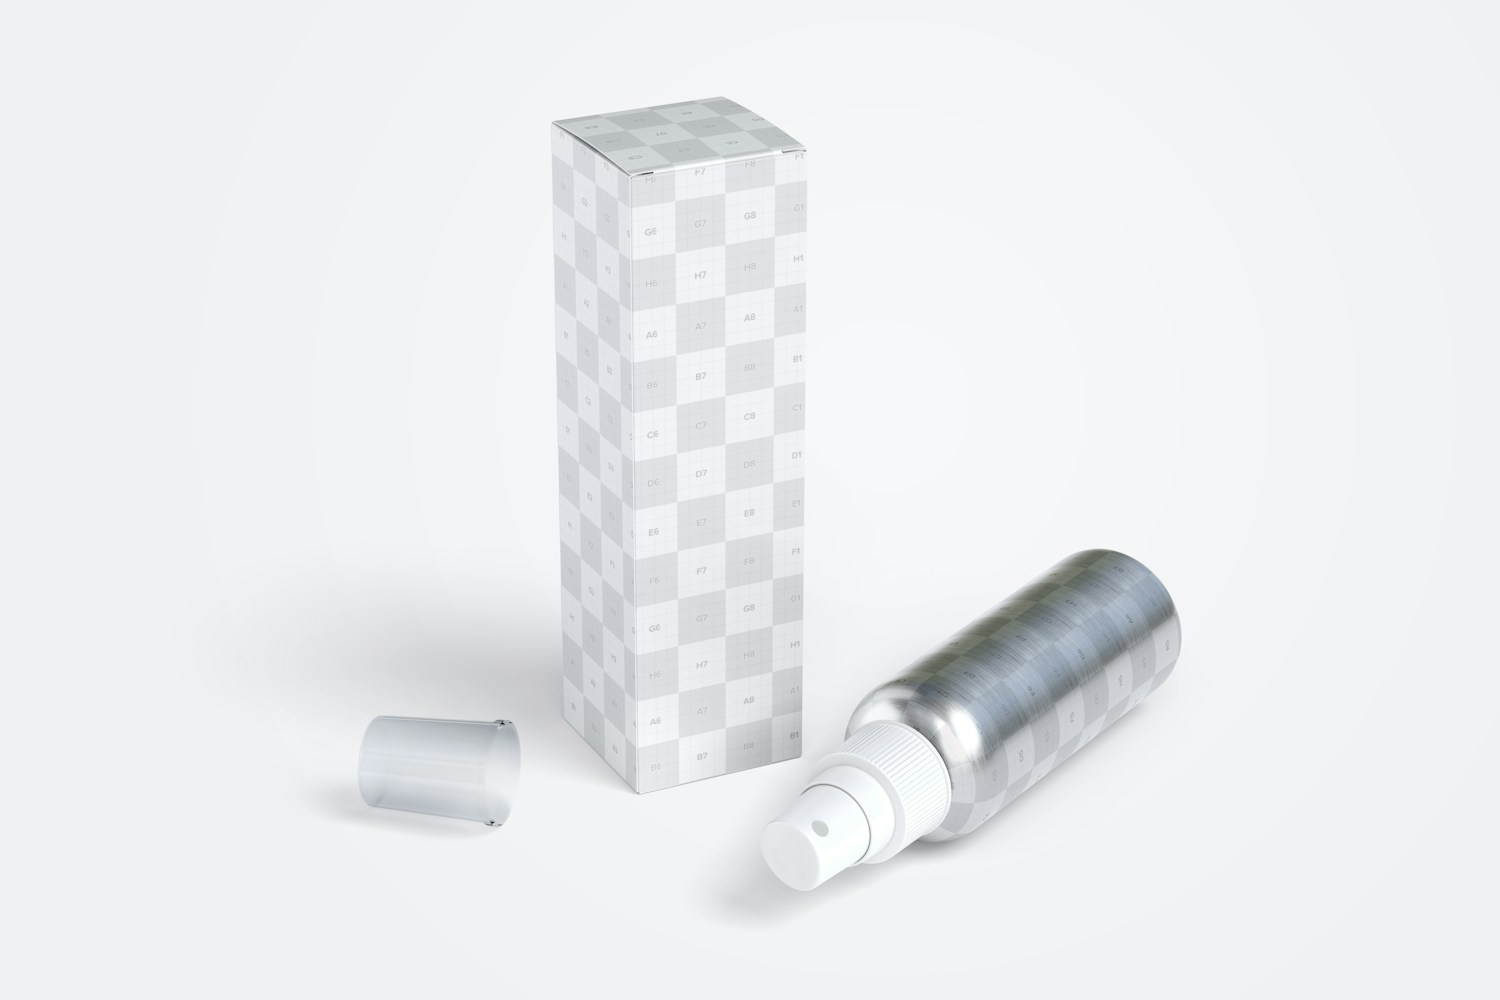 4 oz Metallic Spray Bottle Mockup with Paper Box